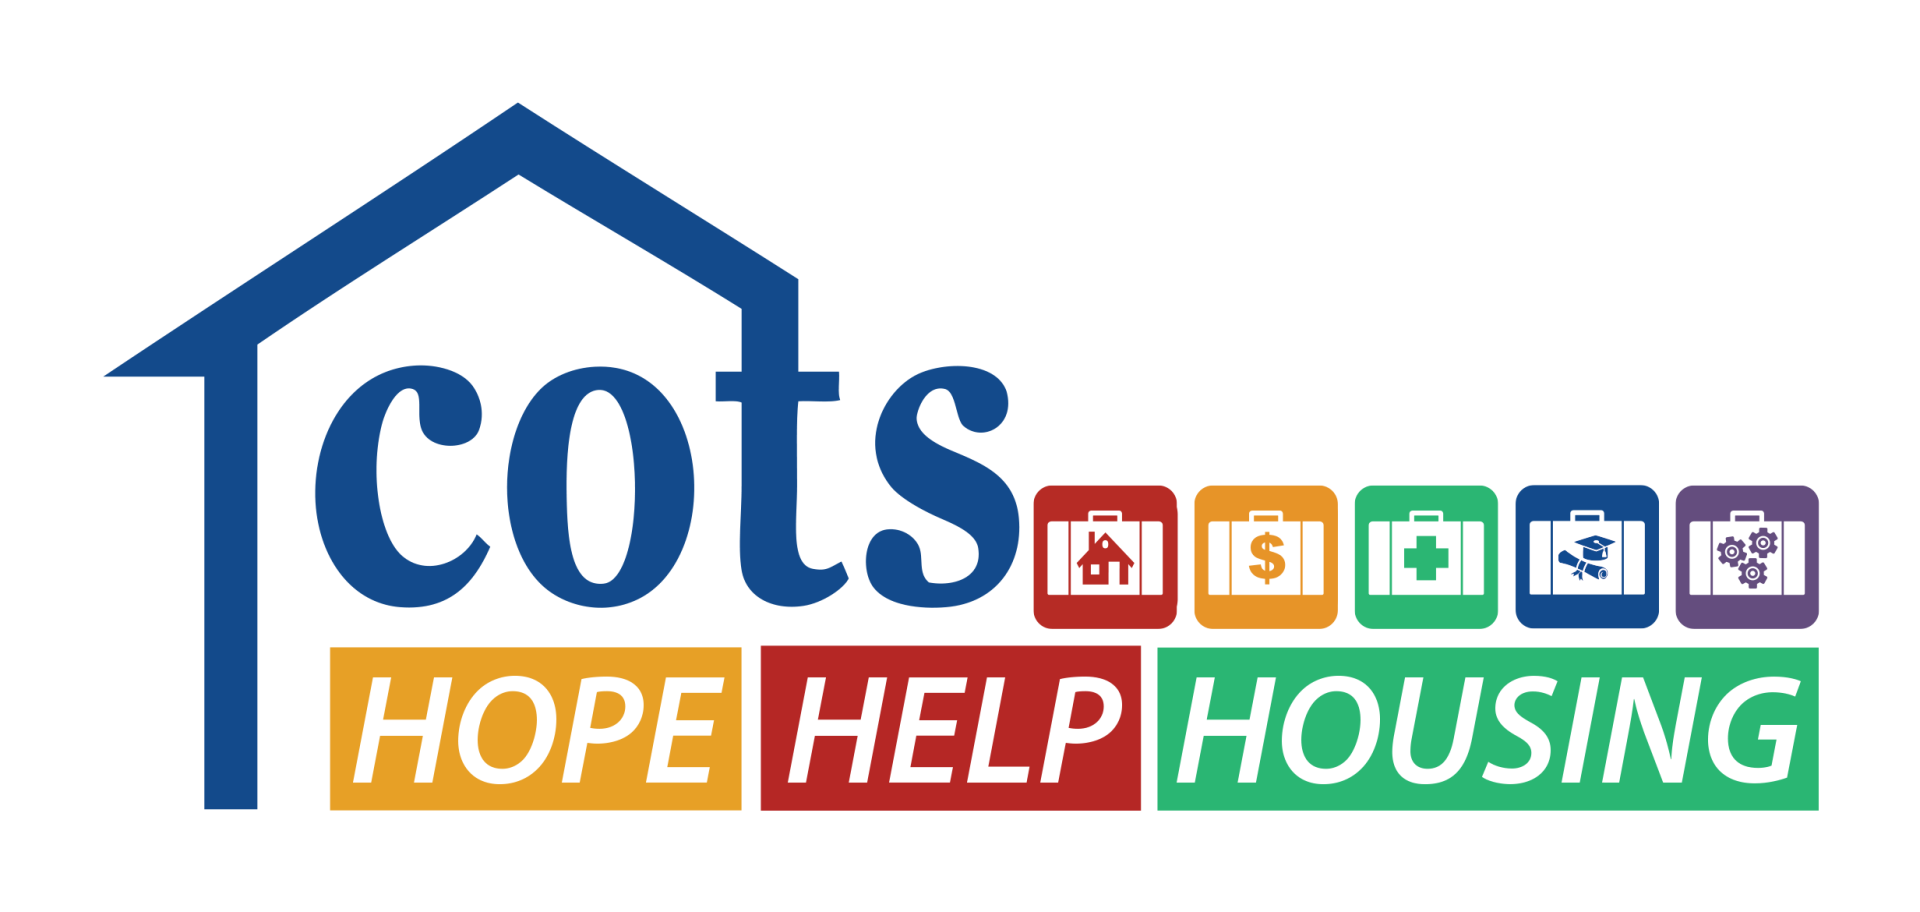 COTS logo